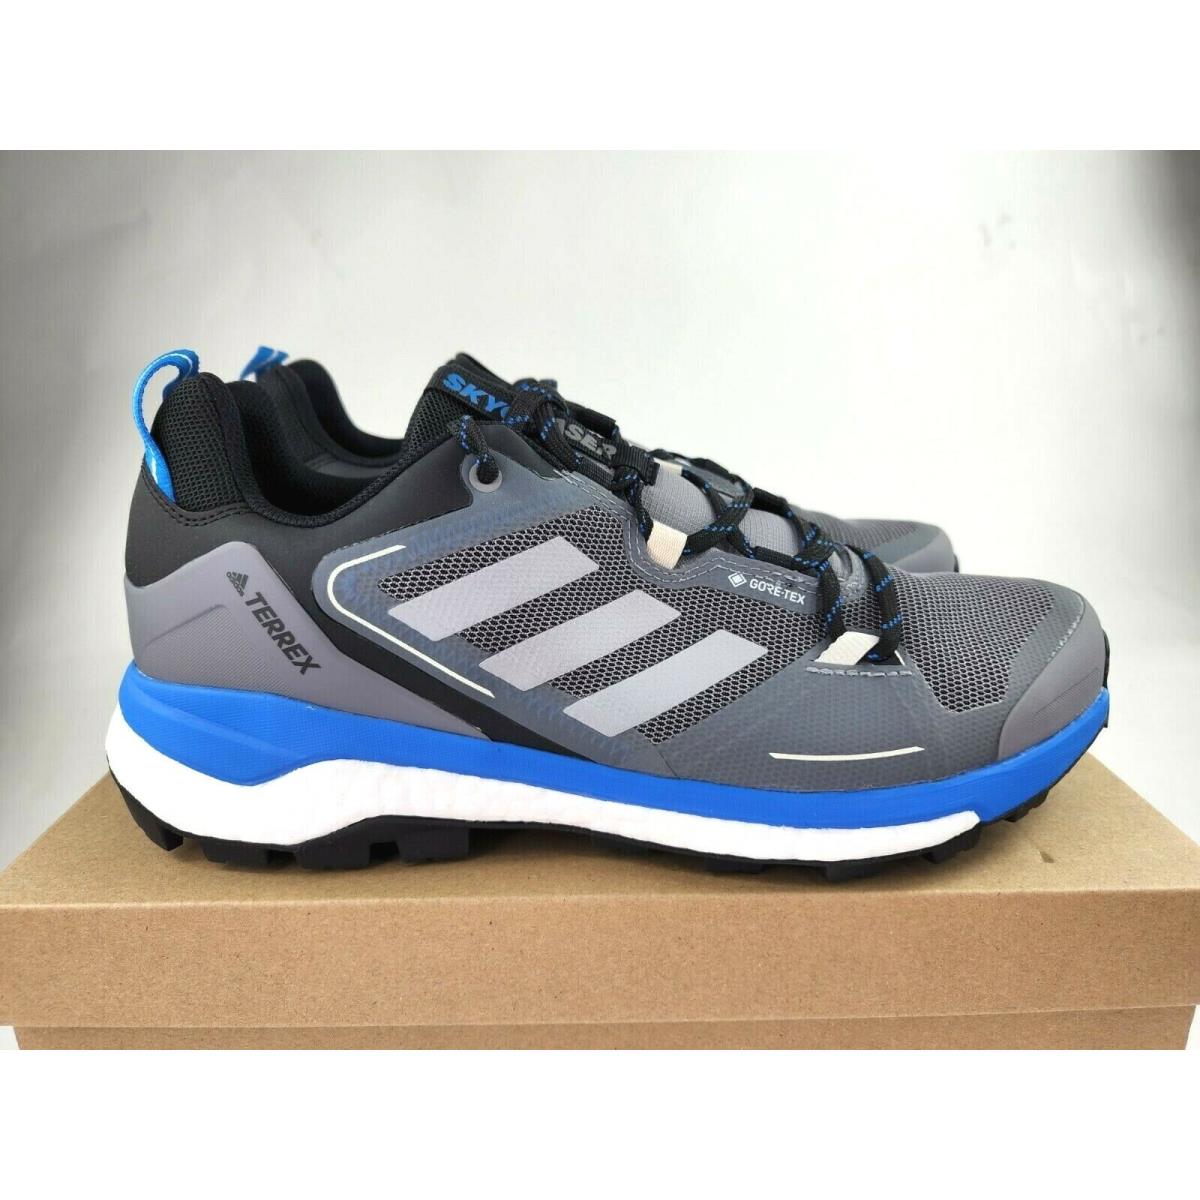 Adidas Terrex Skychaser 2 Gtx Gore-tex Trail Hiking Blue Black White Shoes Boots